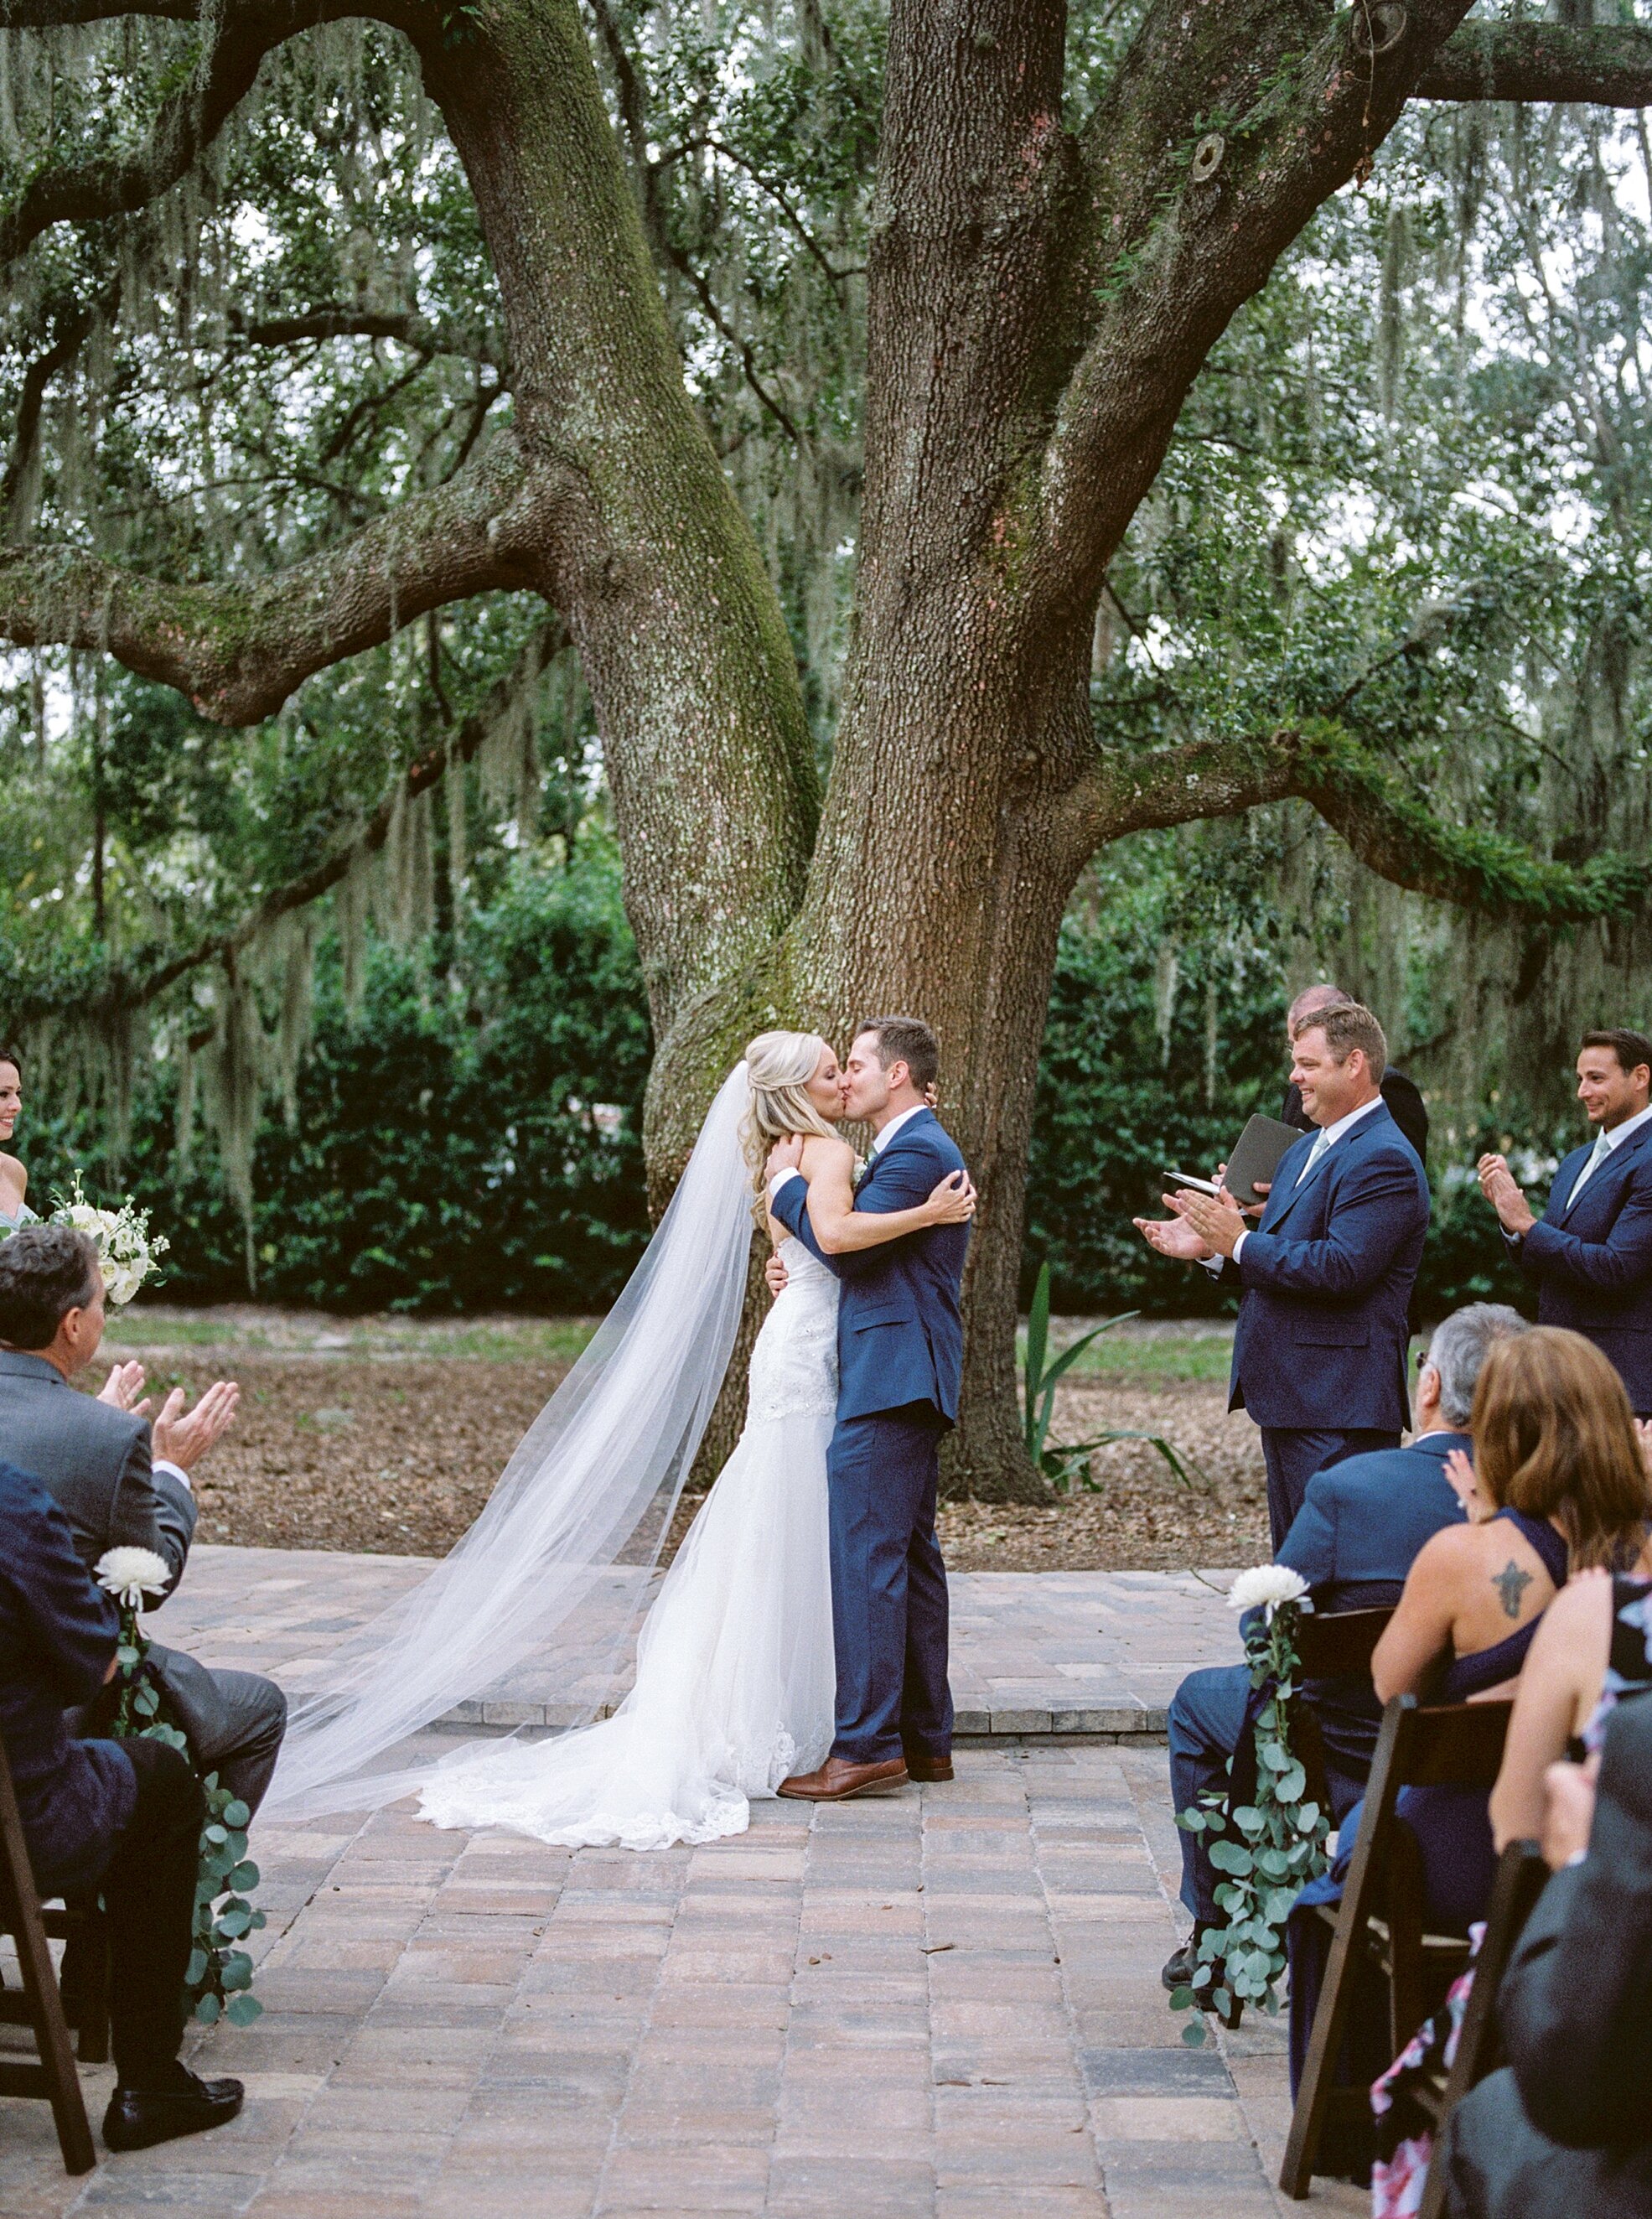 Lisa Silva Photography- Jacksonville, St. Augustine, Ponte Vedra Beach, Amelia Island, Florida Fine Art Film Wedding Photography- Wedding at Bowing Oaks Plantation_0042.jpg